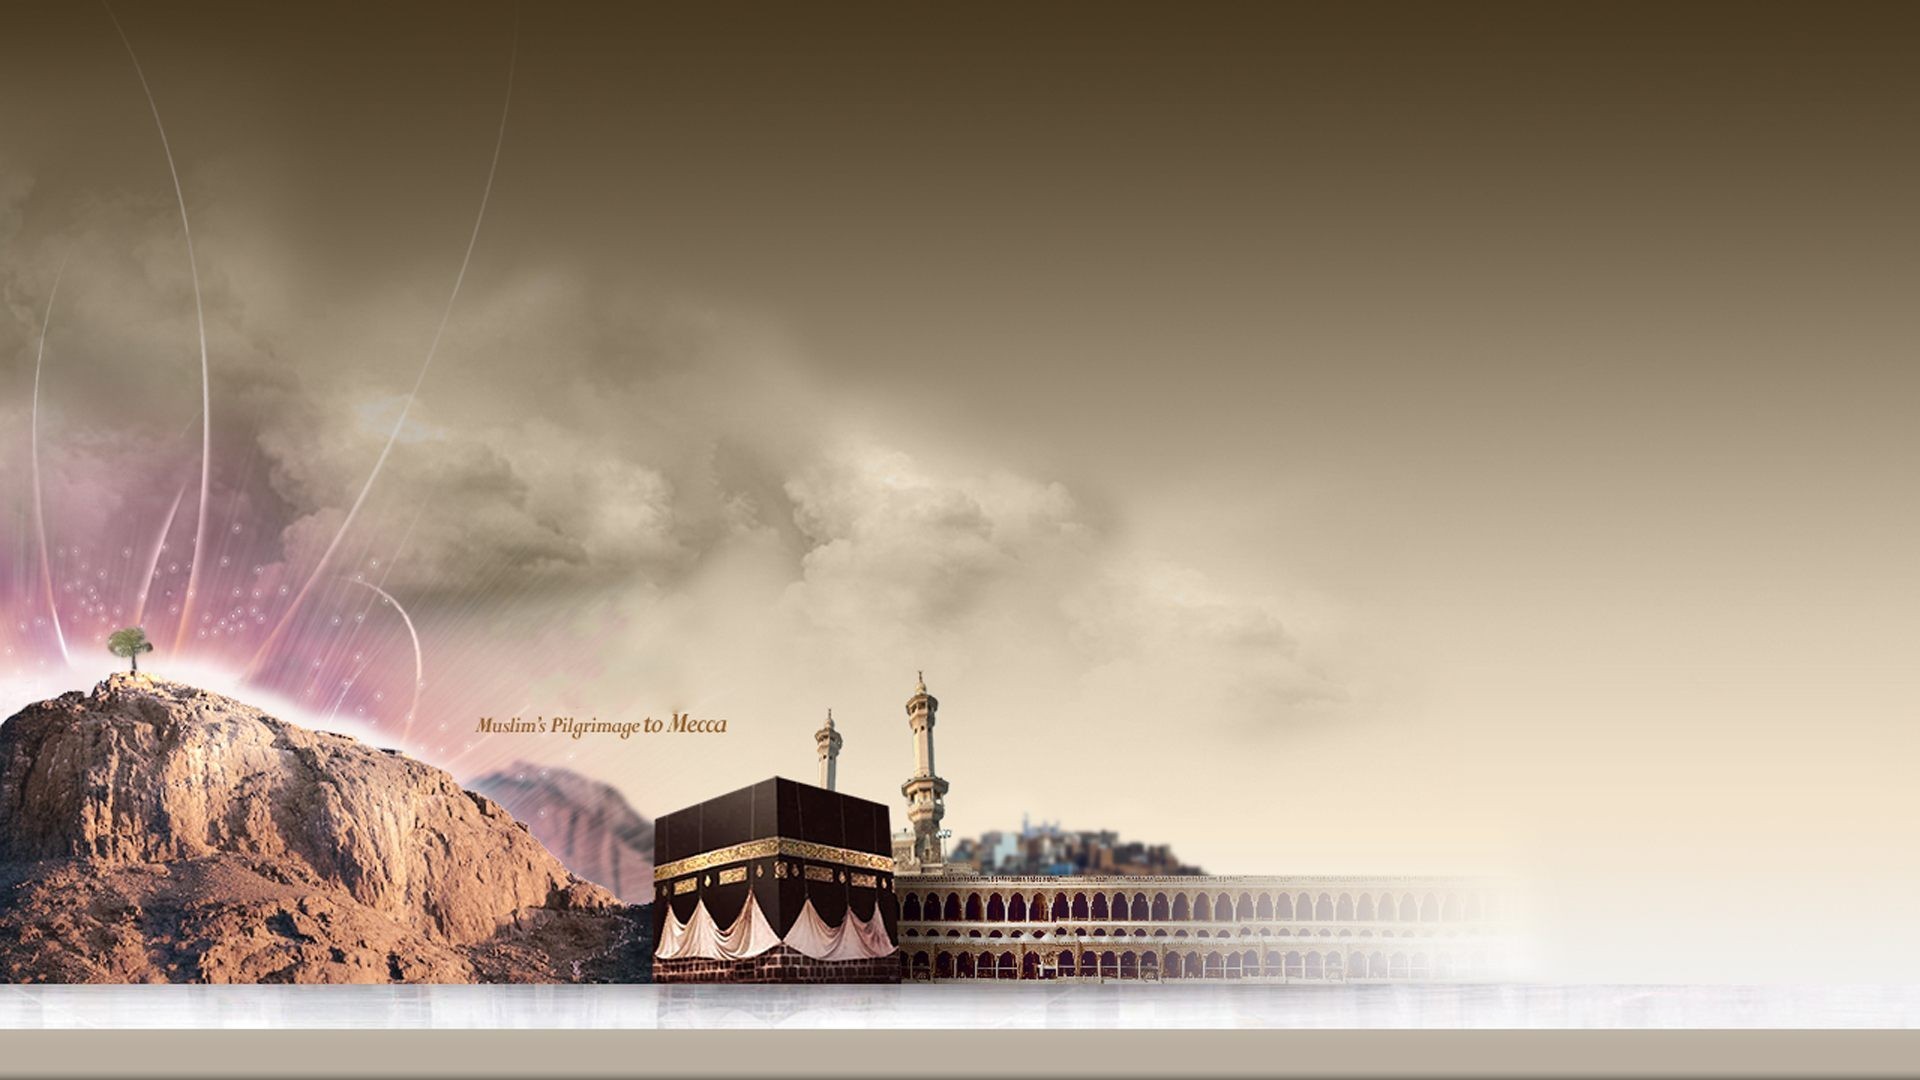 1920x1080 full HD Muslims Hajj Pilgrimage Mecca Desktop wallpaper download free for  Widescreen, Mobile, Table